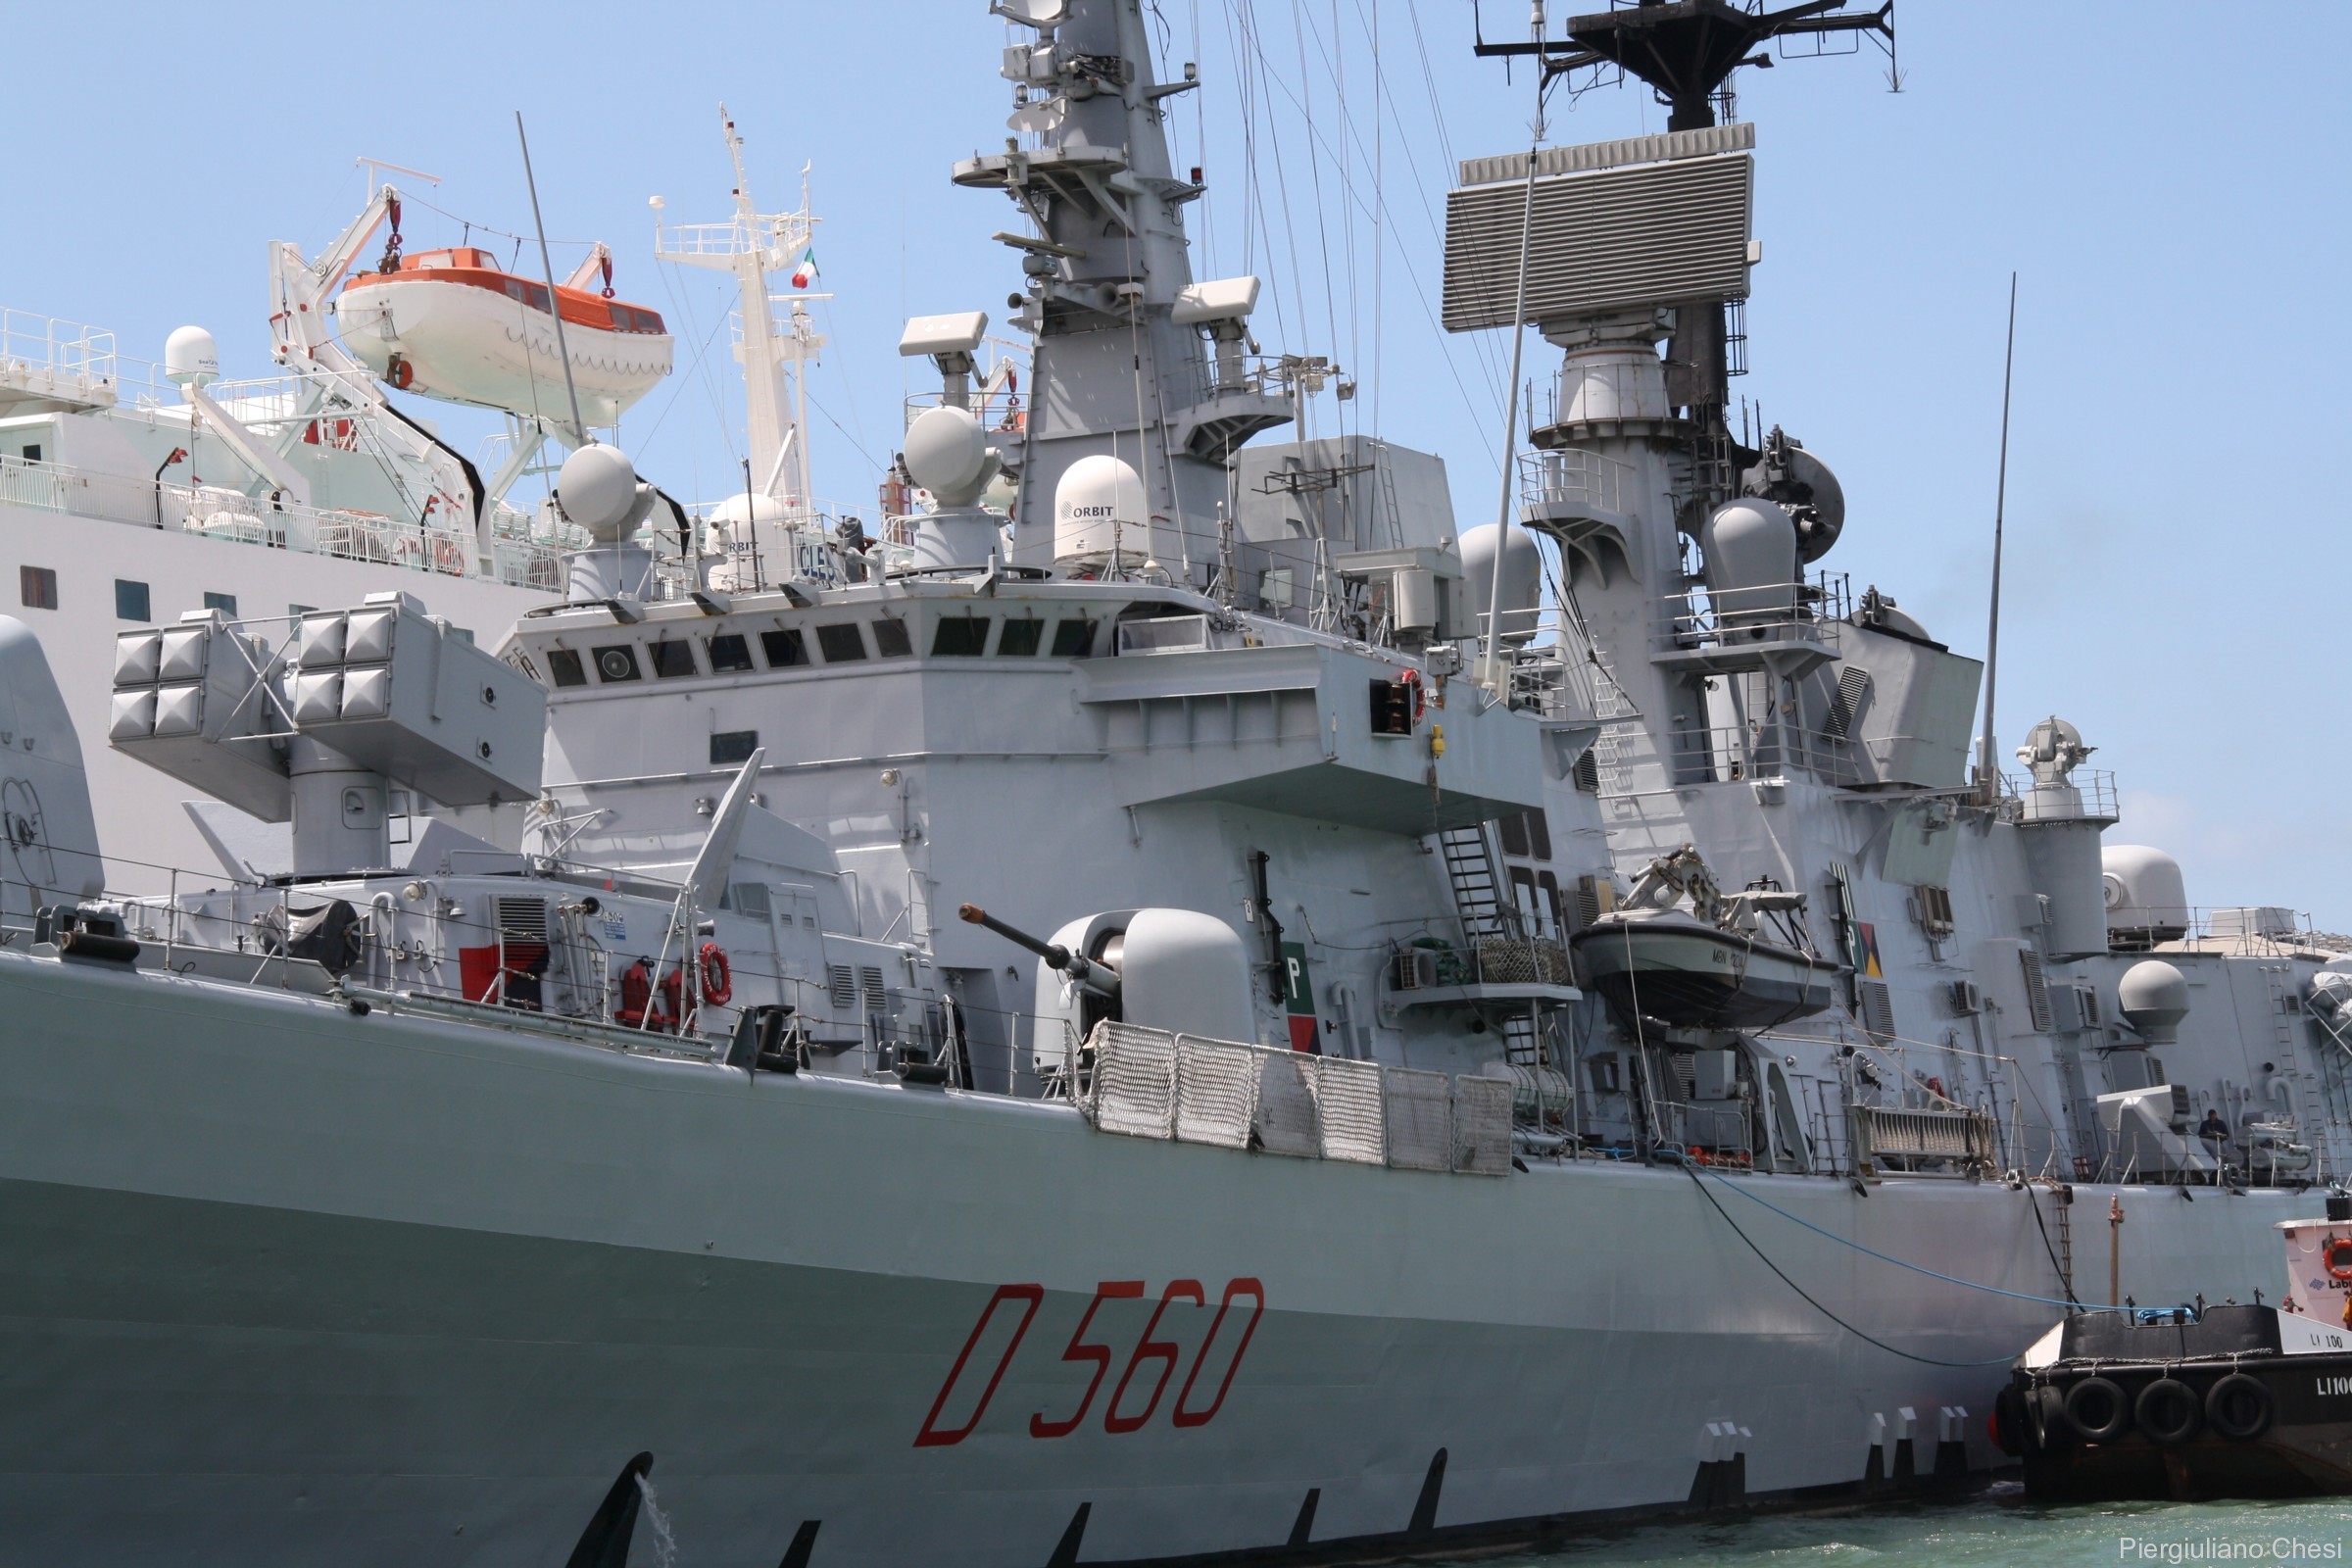 d-560 luigi durand de la penne its nave guided missile destroyer ddg italian navy marina militare 19